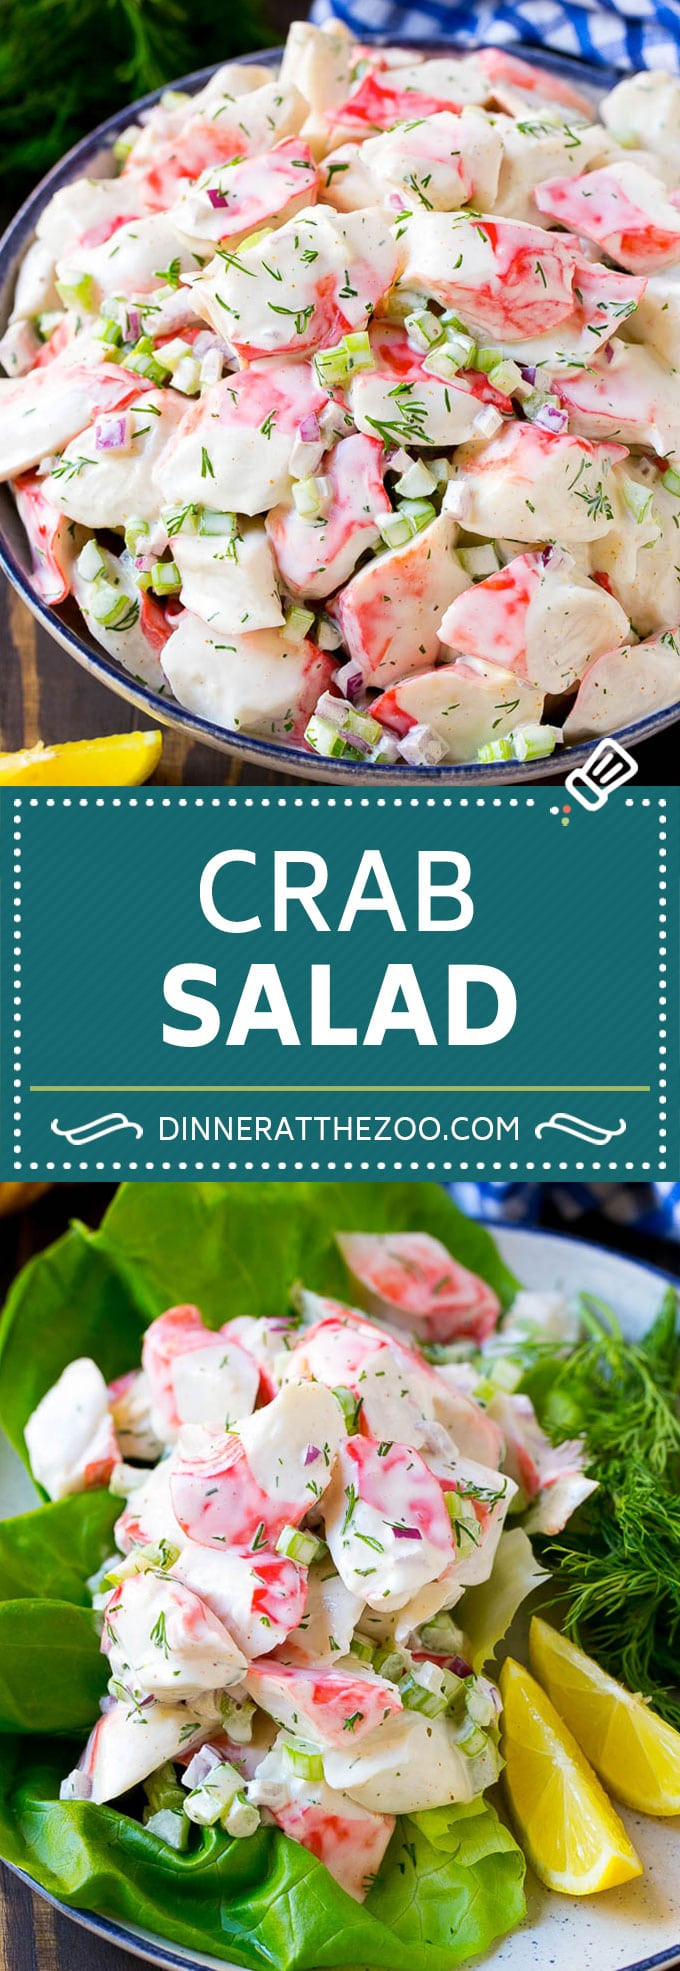 Seafood Pasta Salad Recipes Imitation Crab
 Crab Salad Recipe Dinner at the Zoo